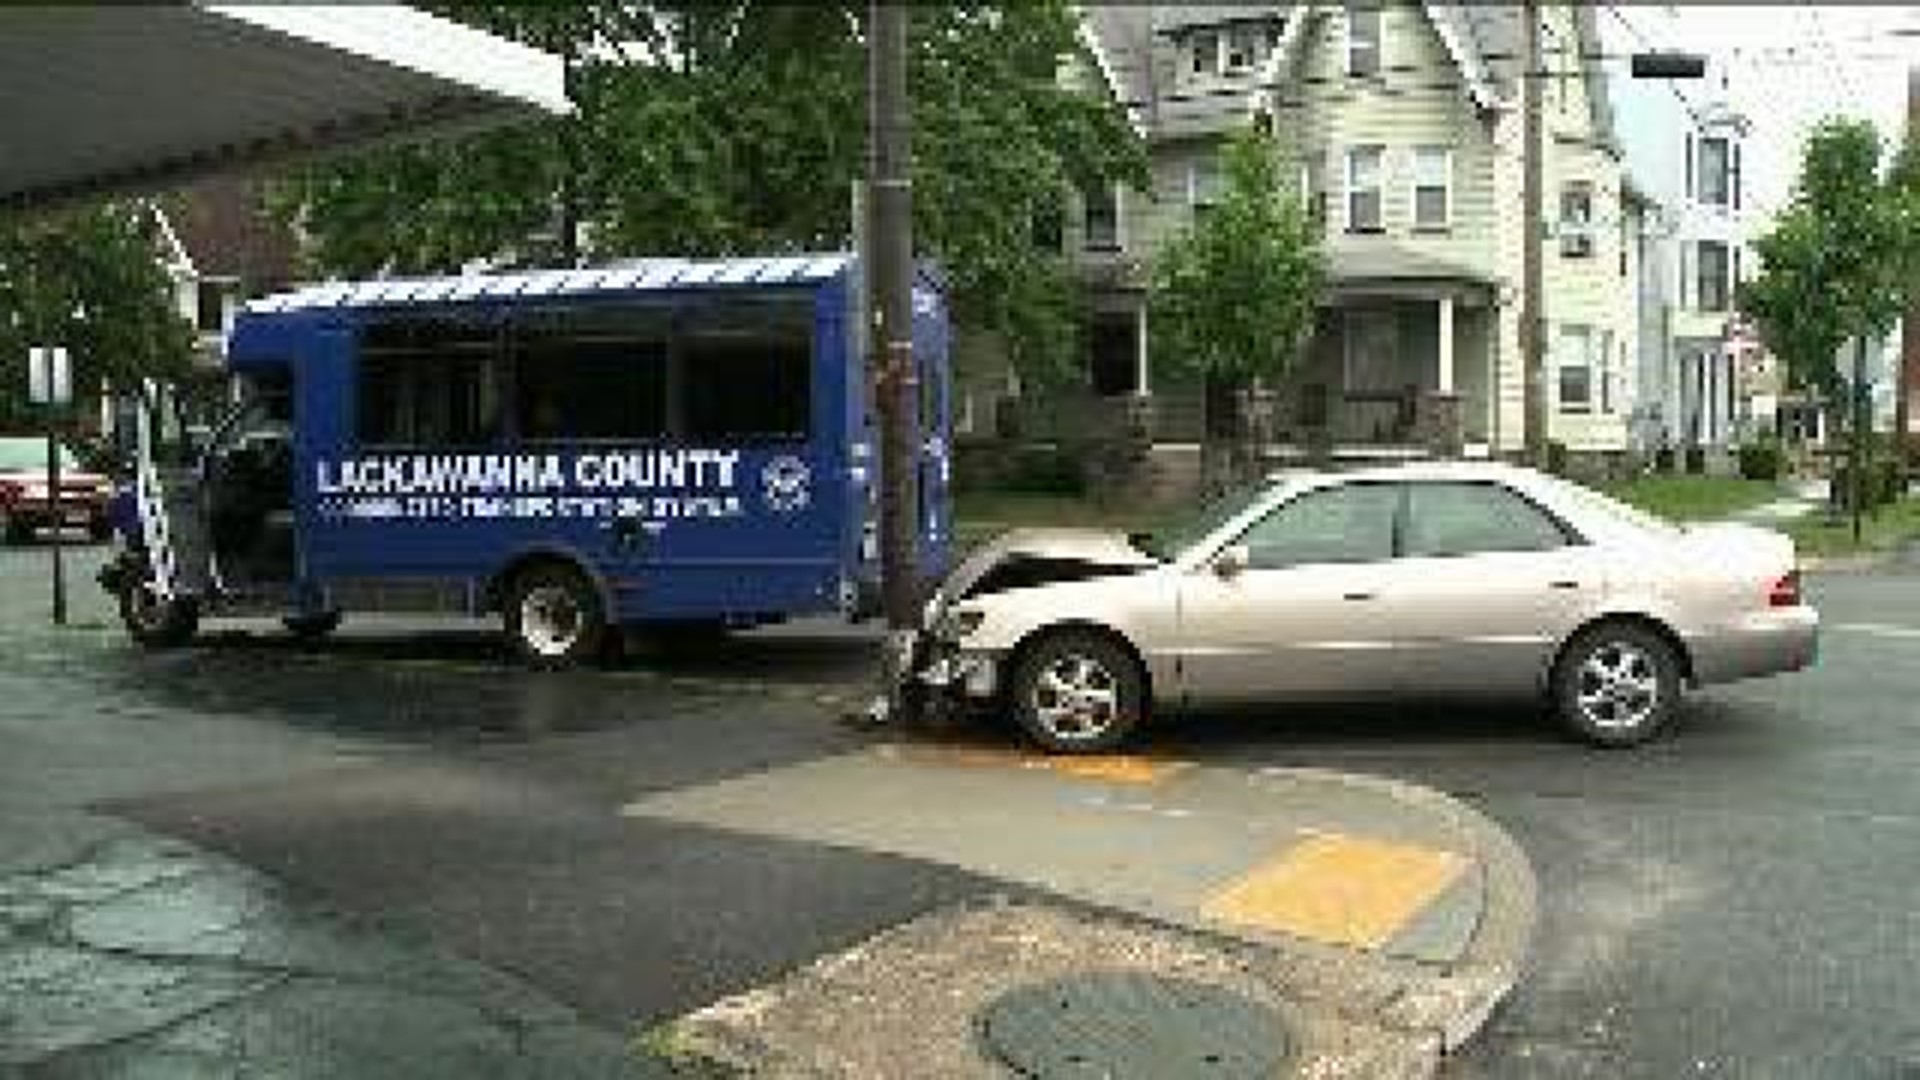 Car and Bus Collide in Scranton